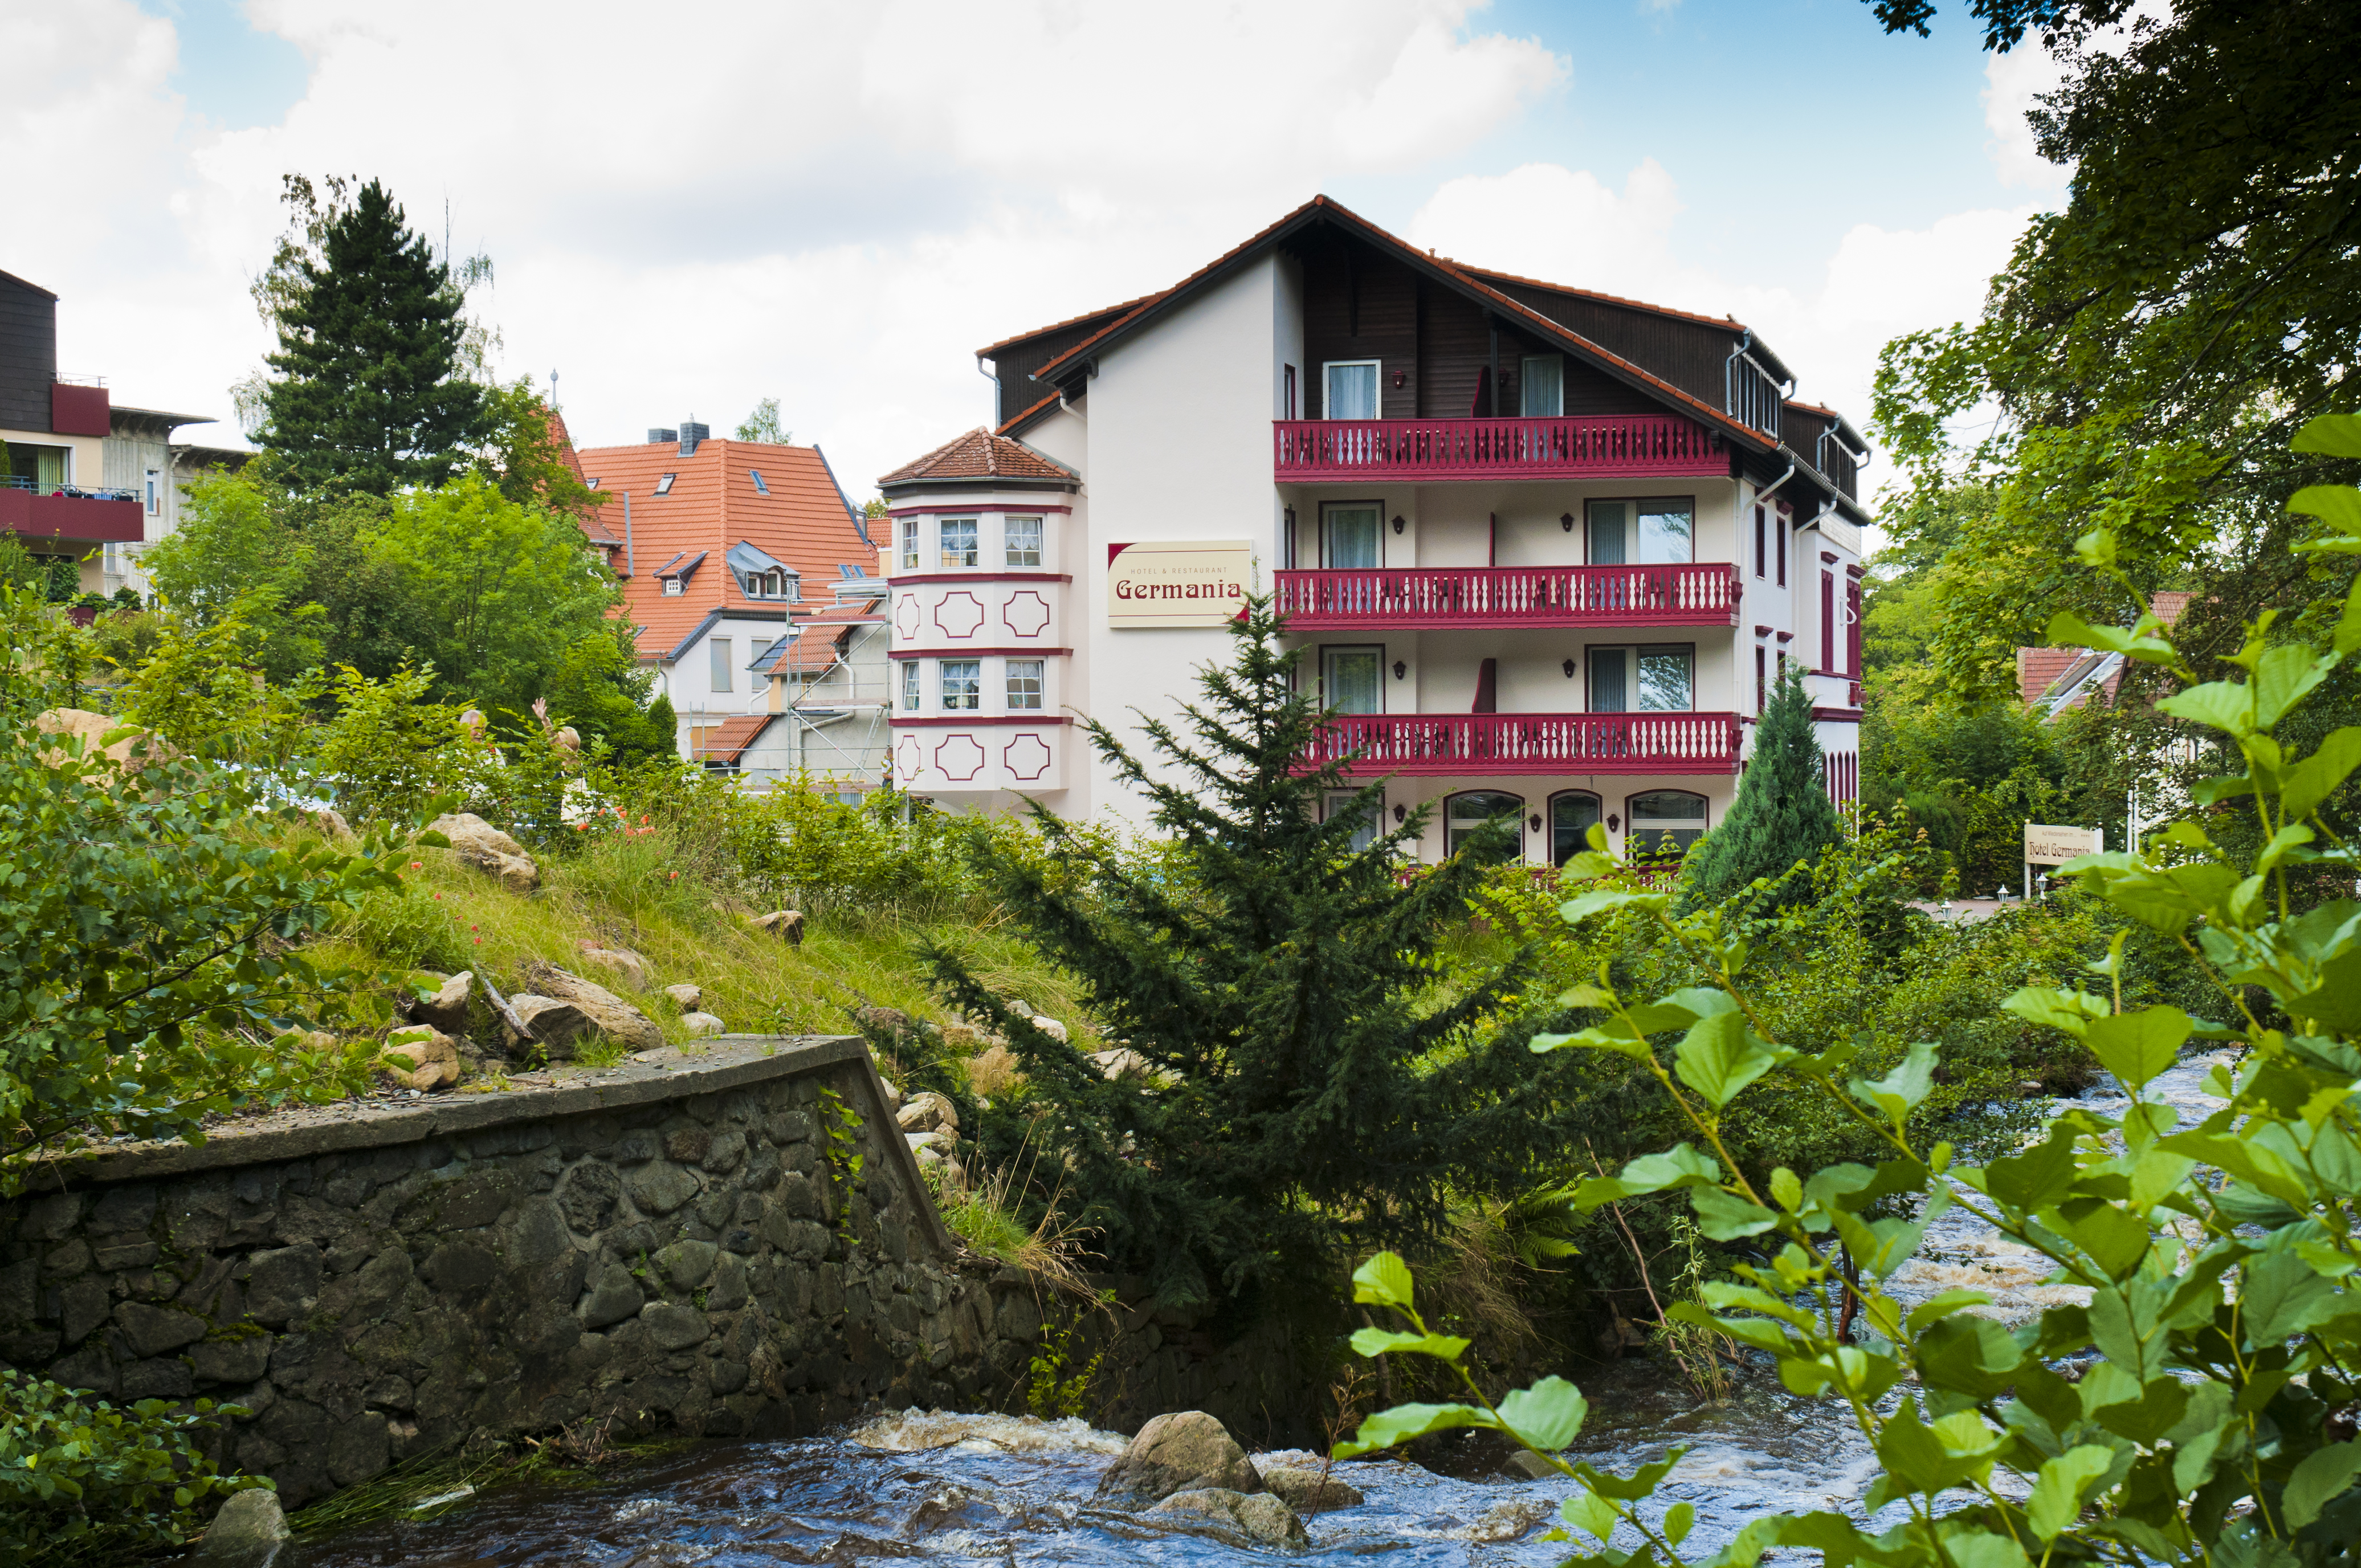 Kurparkhotel "Germania", Bad Harzburg hotel